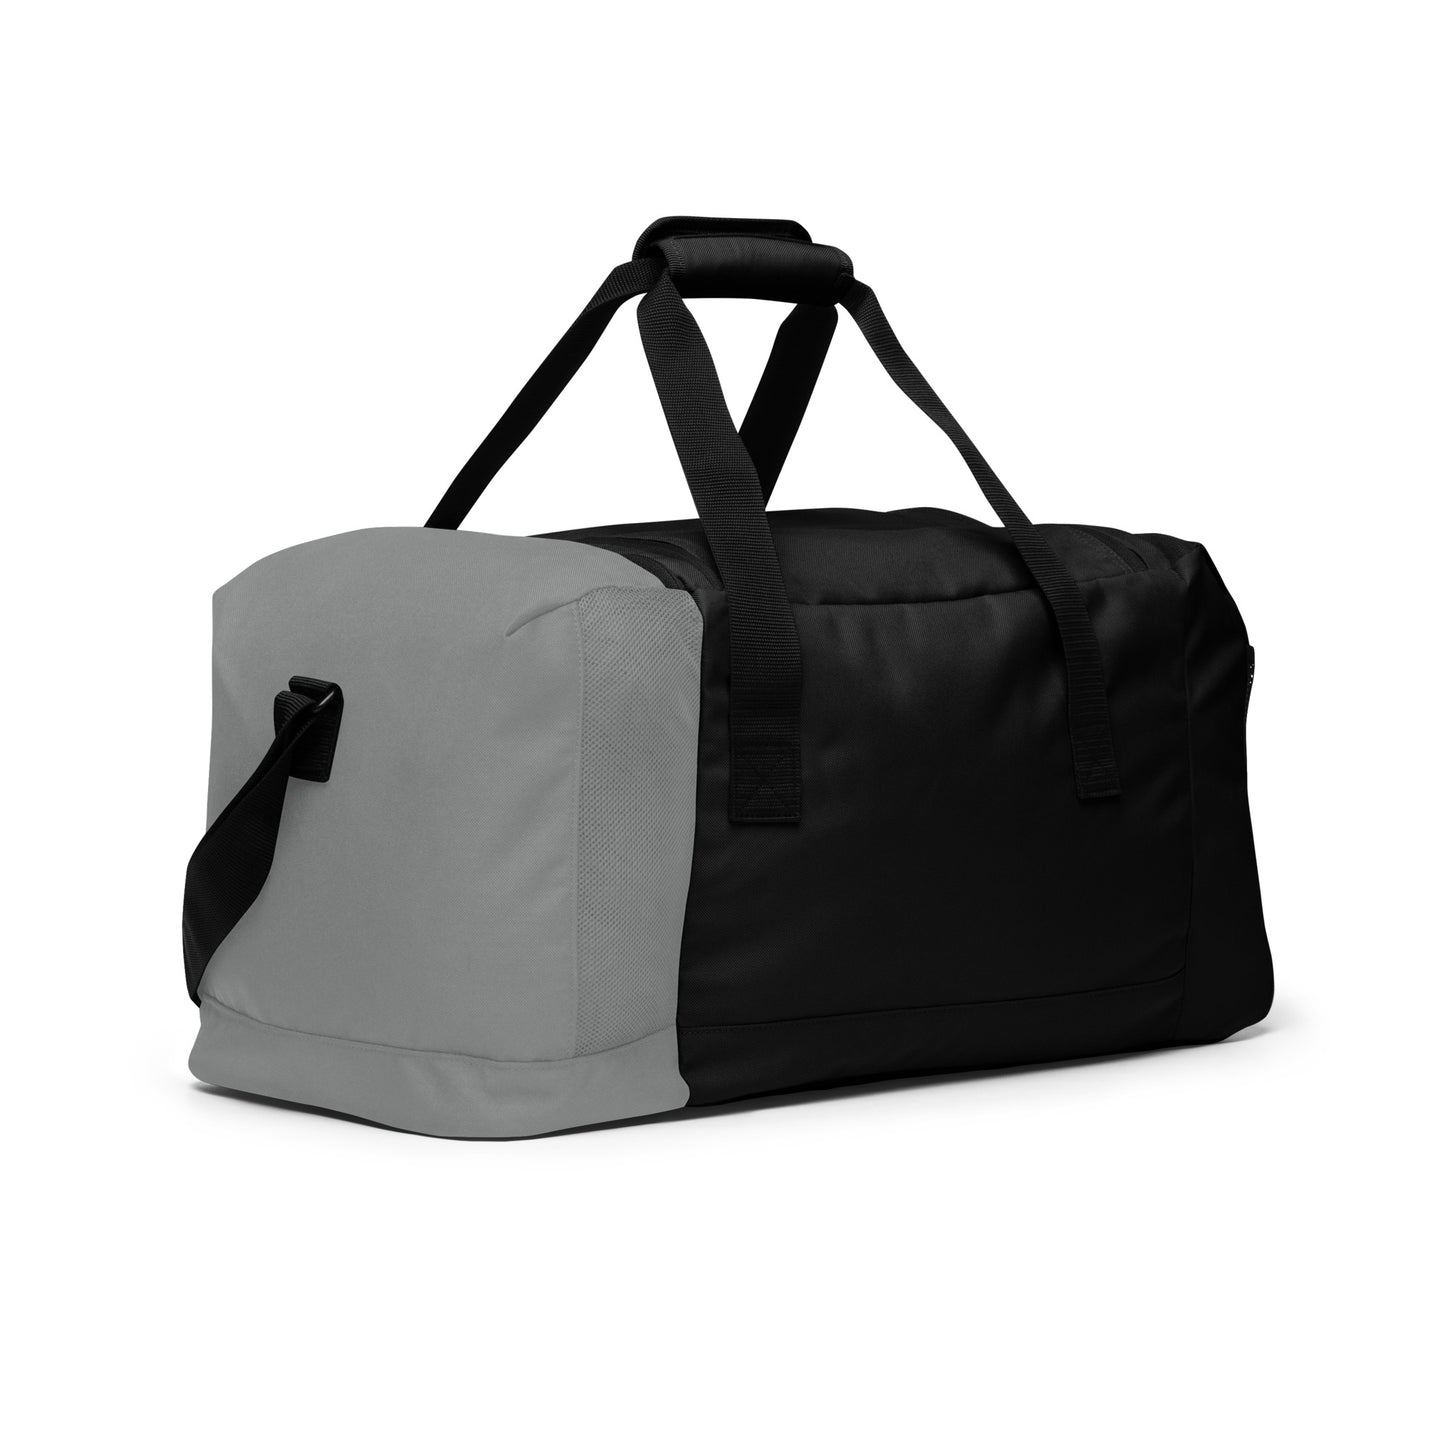 HBCU x Adidas - Duffle Bag